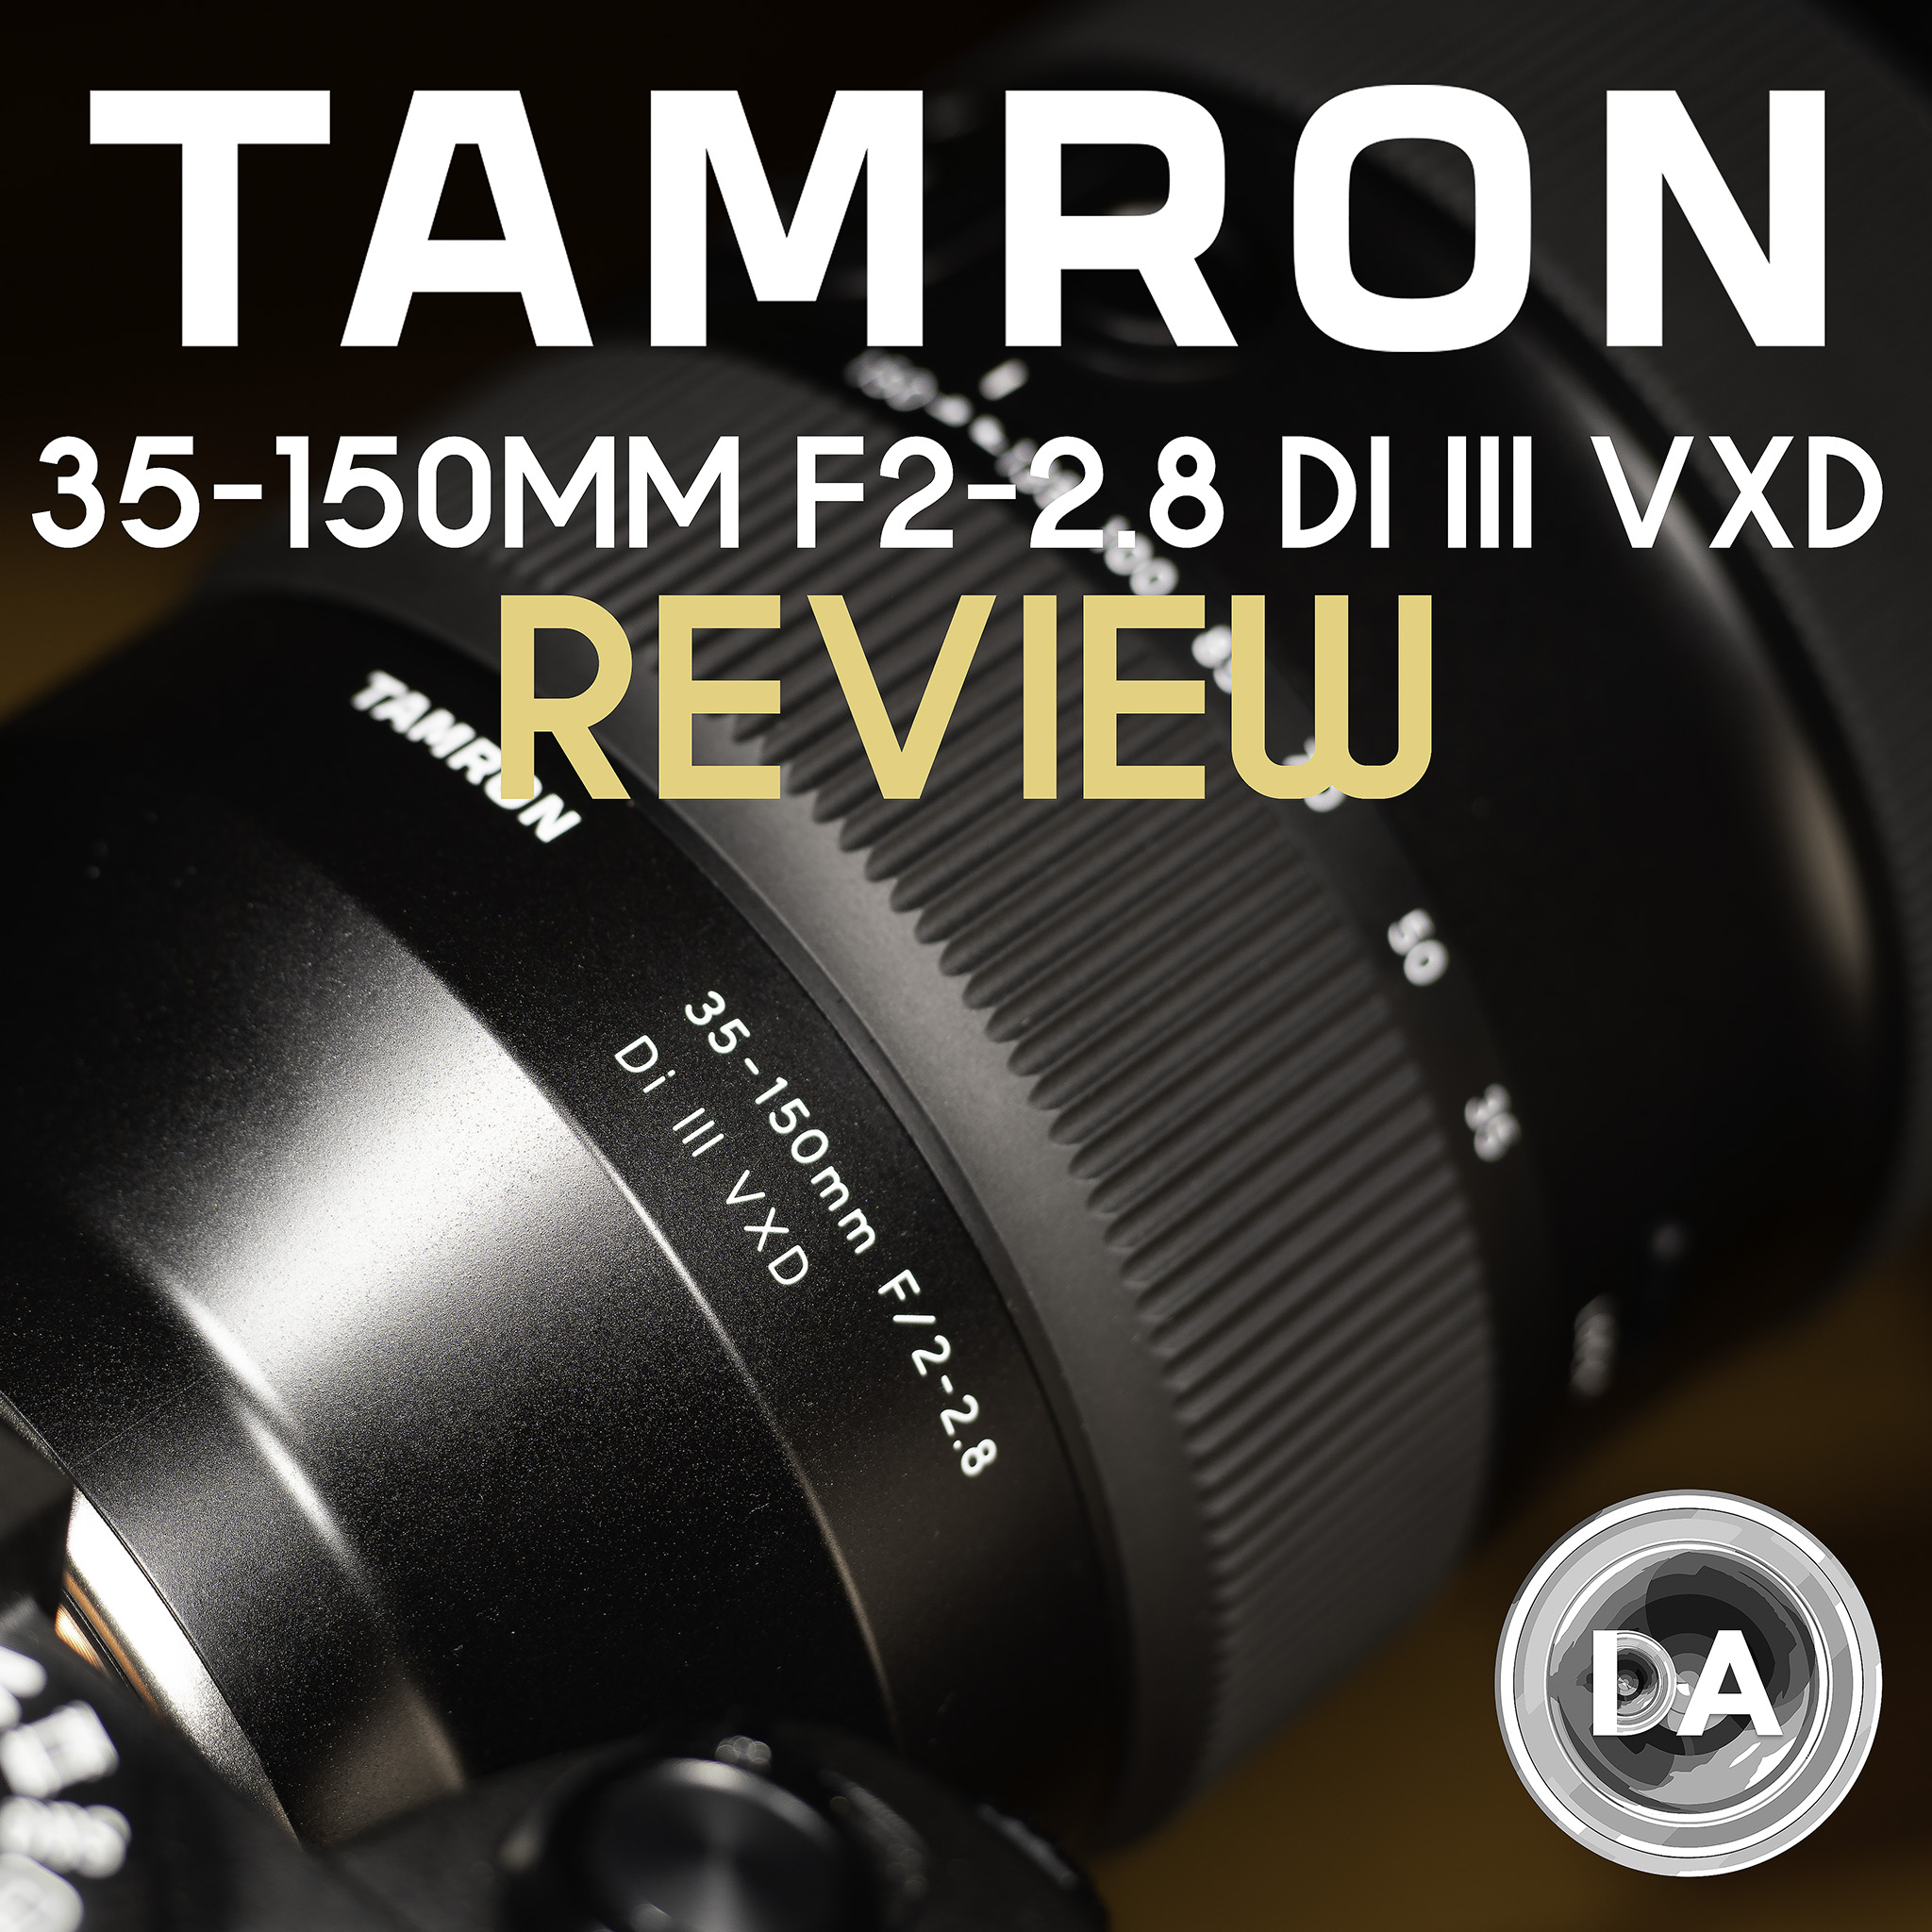 Tamron 35-150mm F2-2.8 VXD (A058) Review - DustinAbbott.net